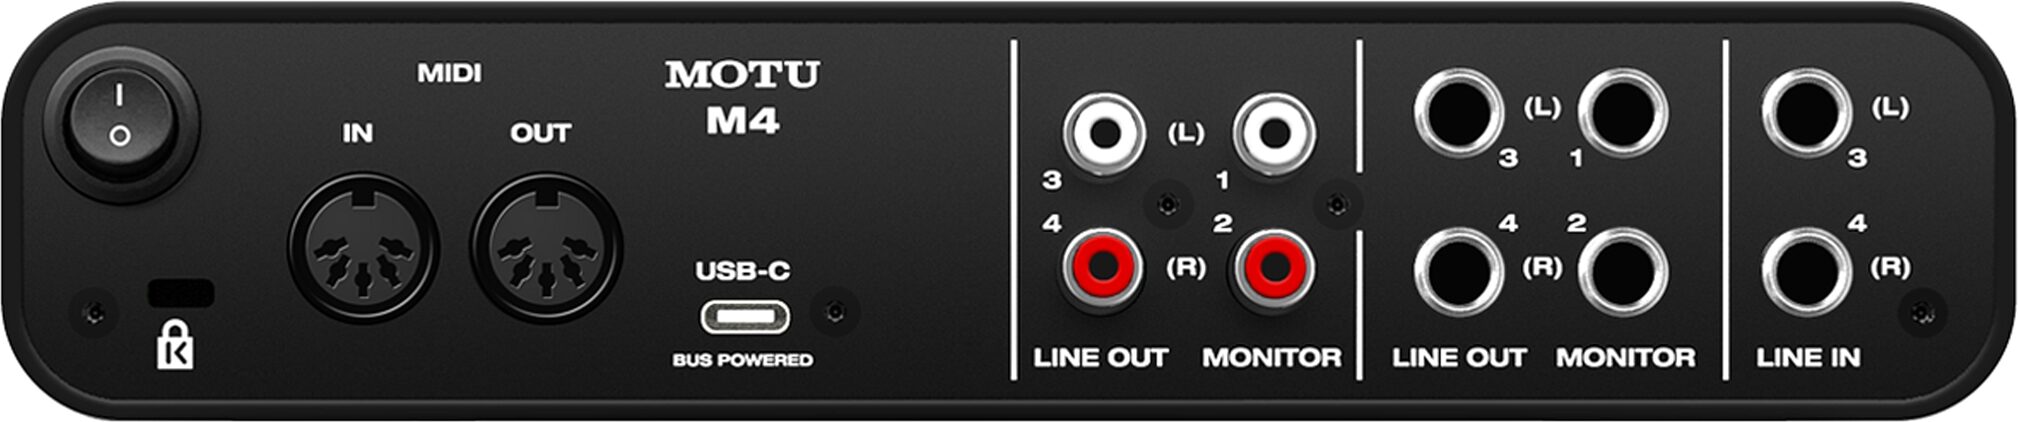 MOTU M4 USB Audio Interface | zZounds